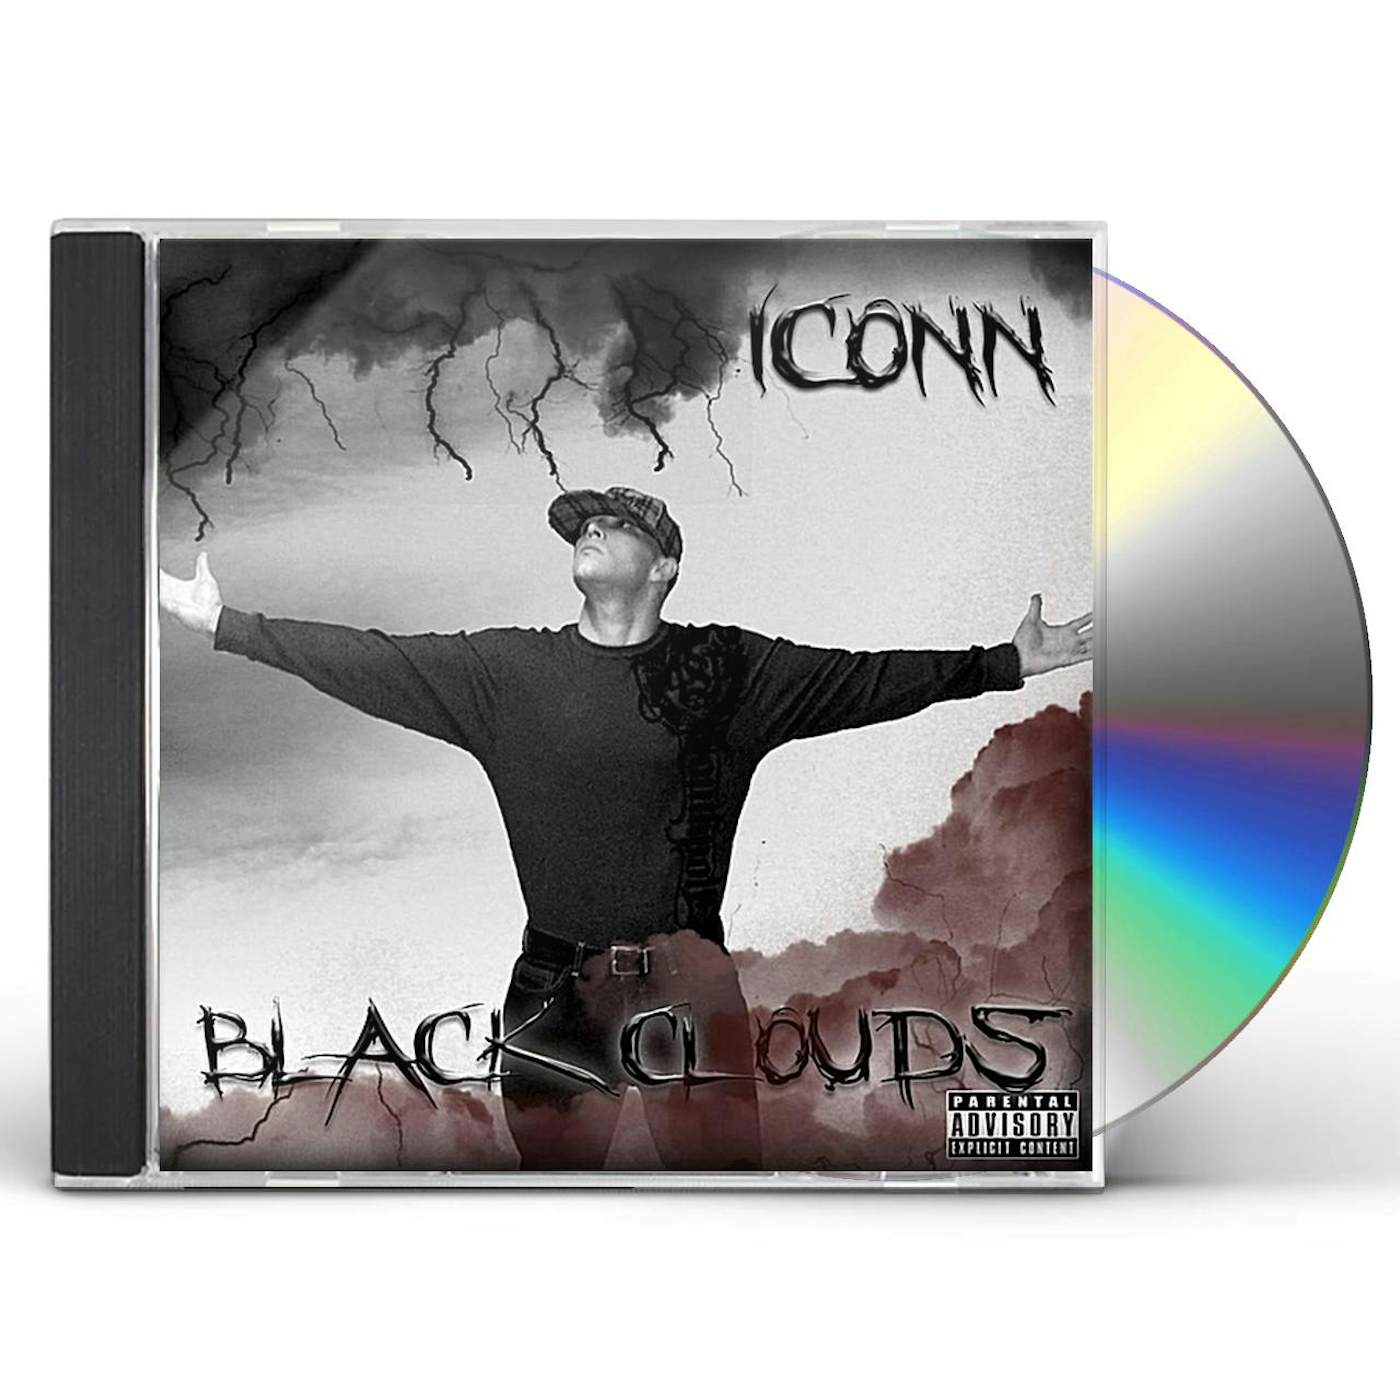 Iconn BLACK CLOUDS CD